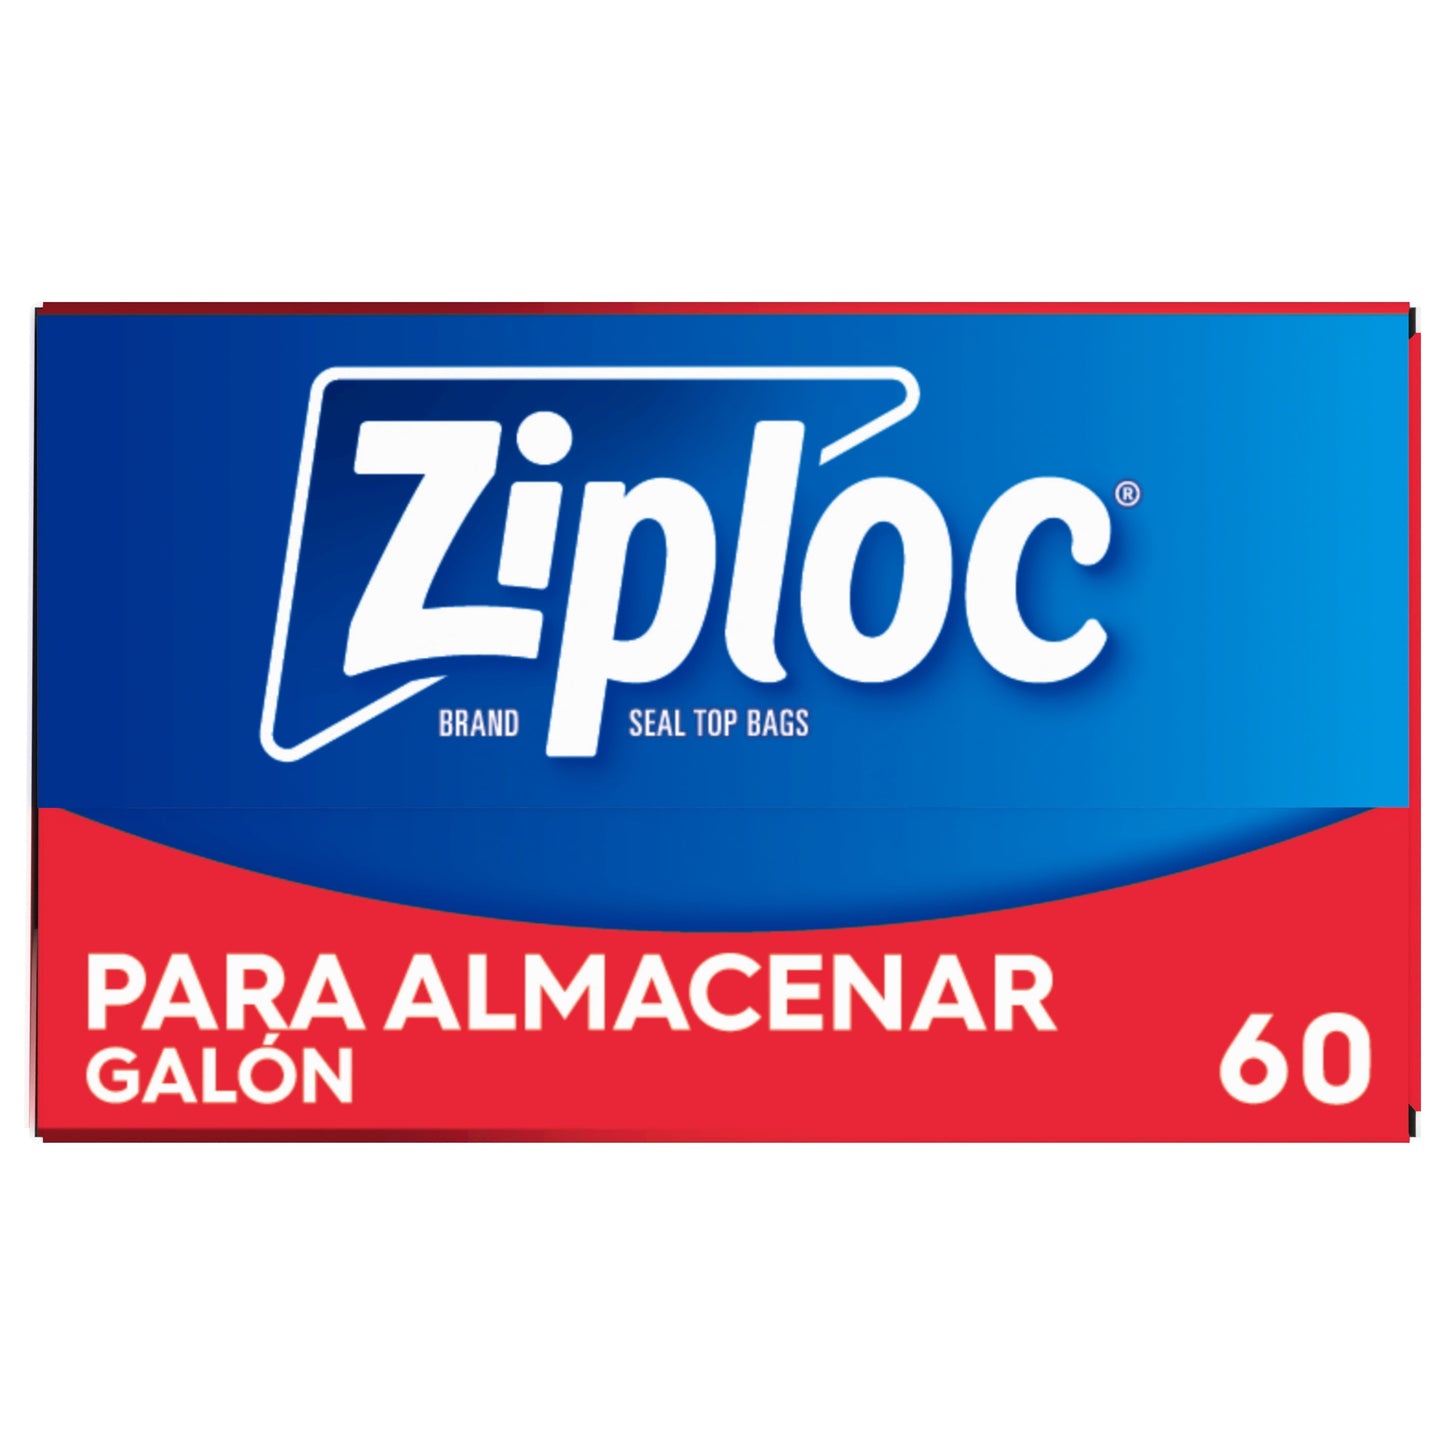 Ziploc Storage Gallon Bag, Stay Open Design, Grip 'n Seal Technology, Reusable, 60 Count